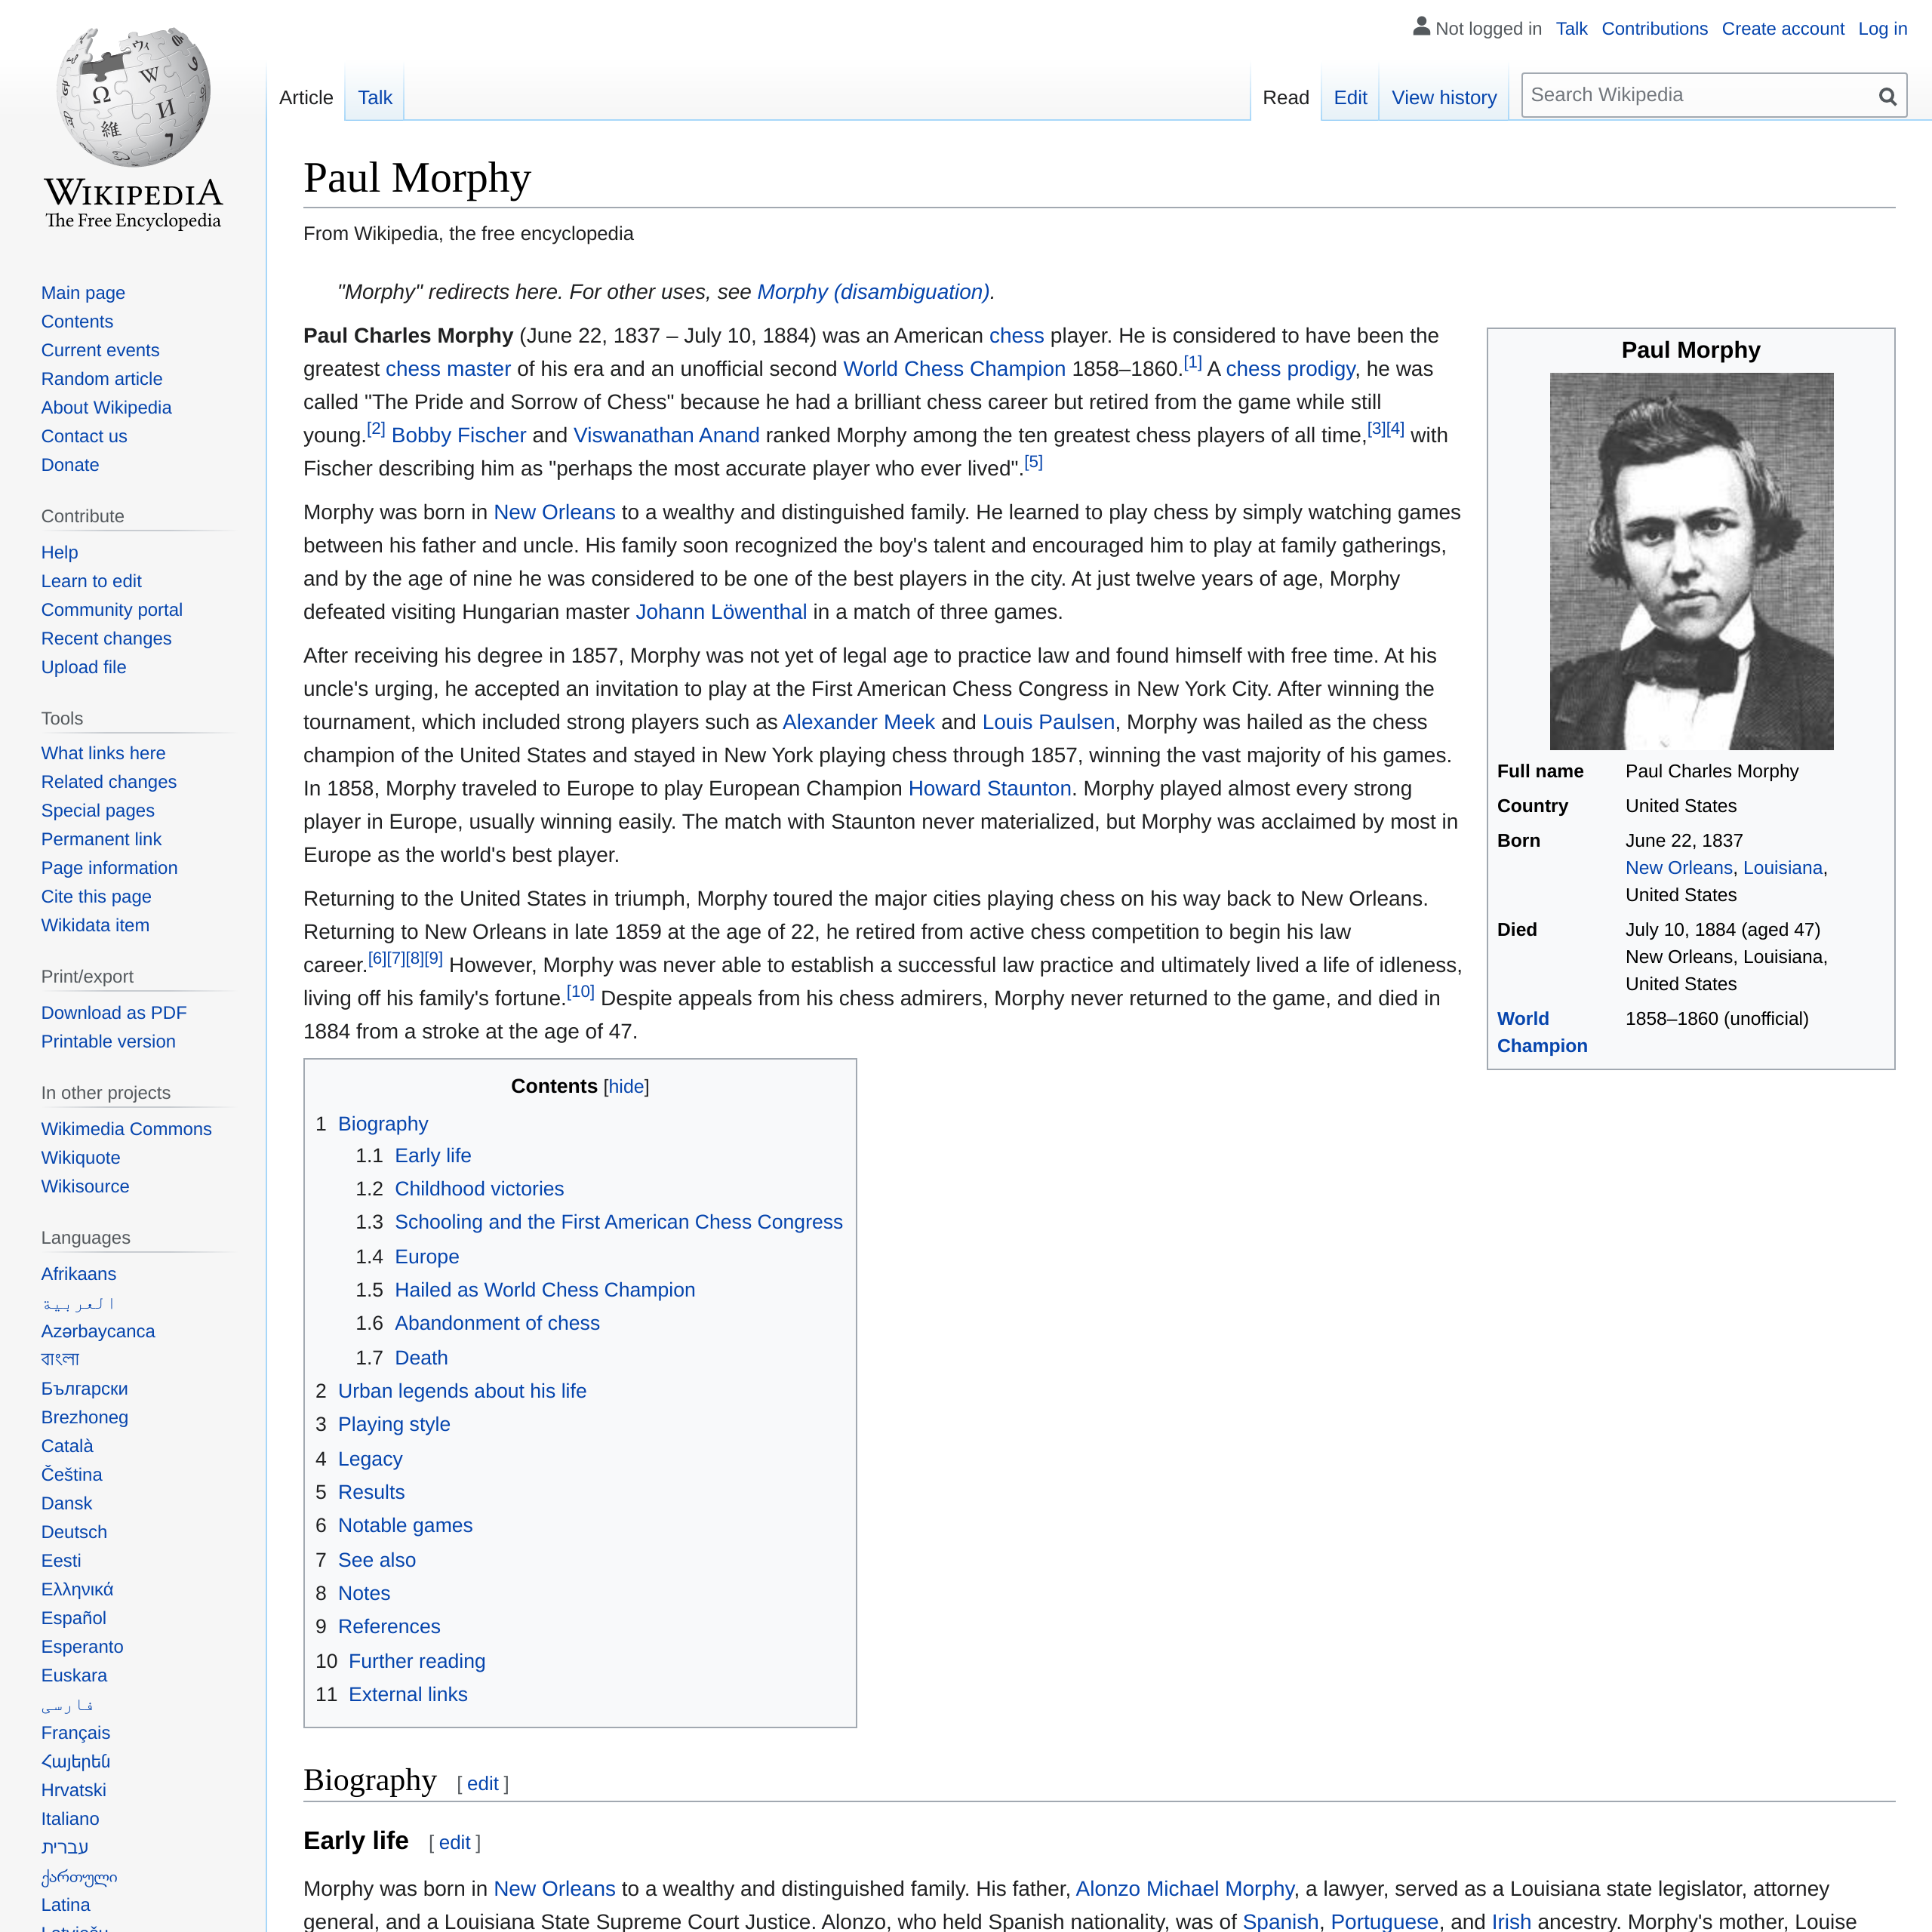 Paul Charles Morphy – Wikipedia